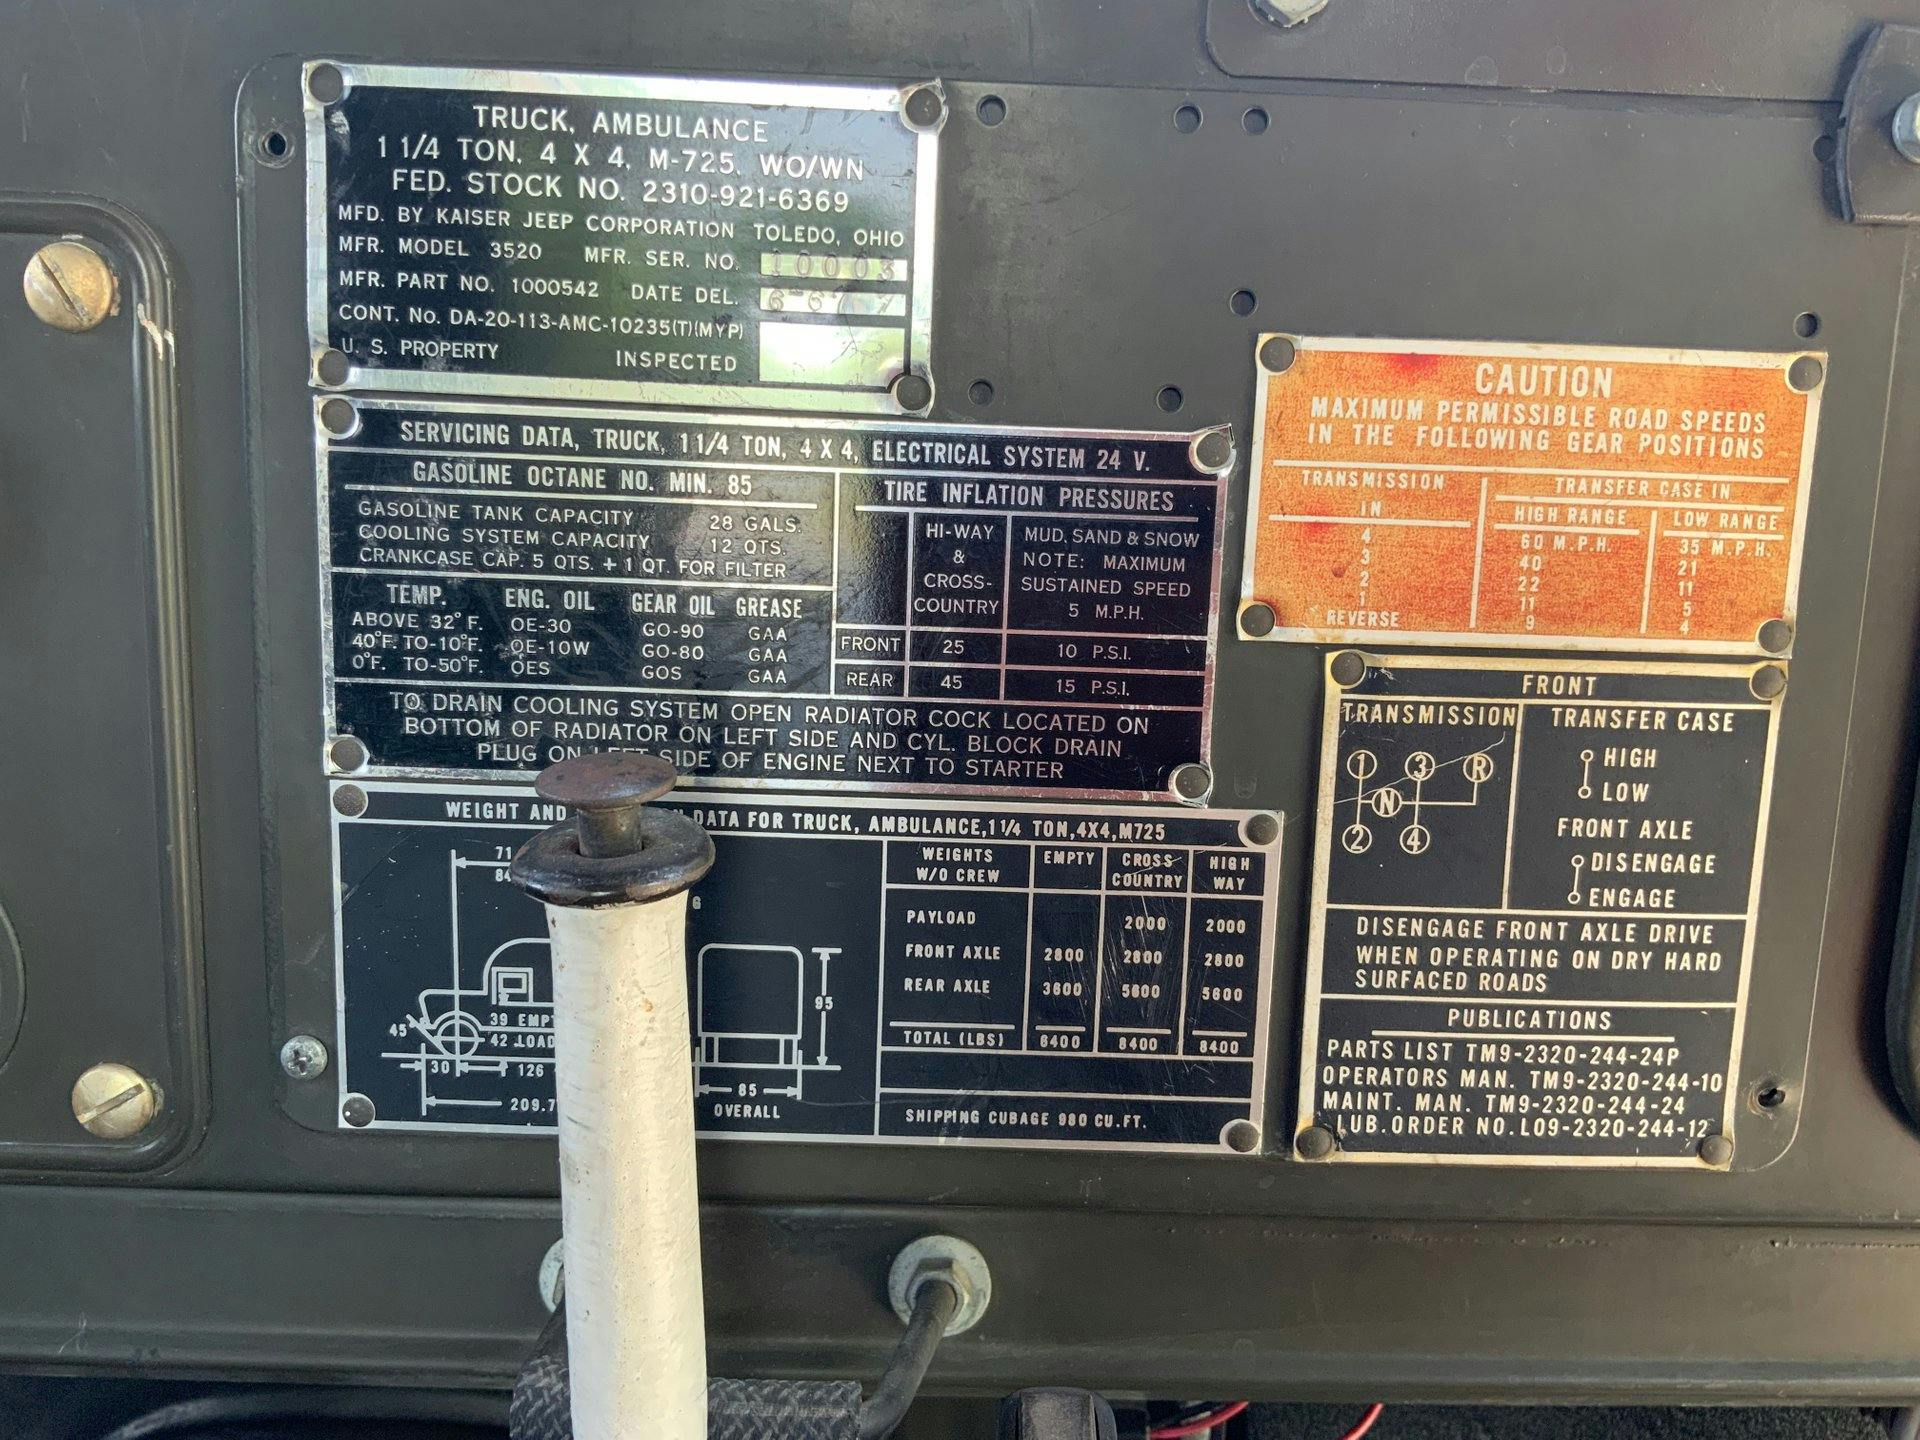 1967 Jeep M725 Ambulance Info Placards